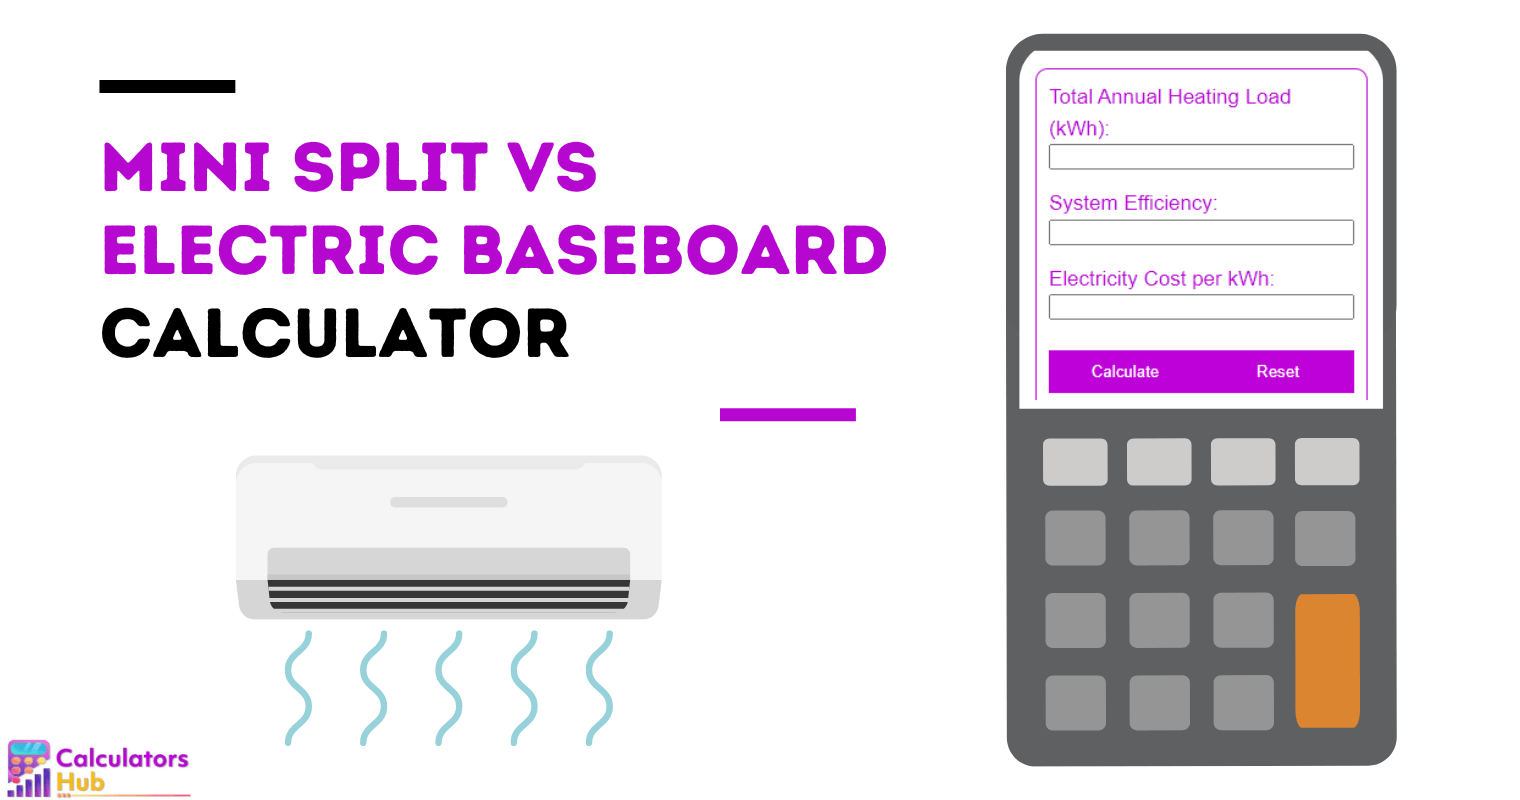 Mini Split vs Electric Baseboard Calculator